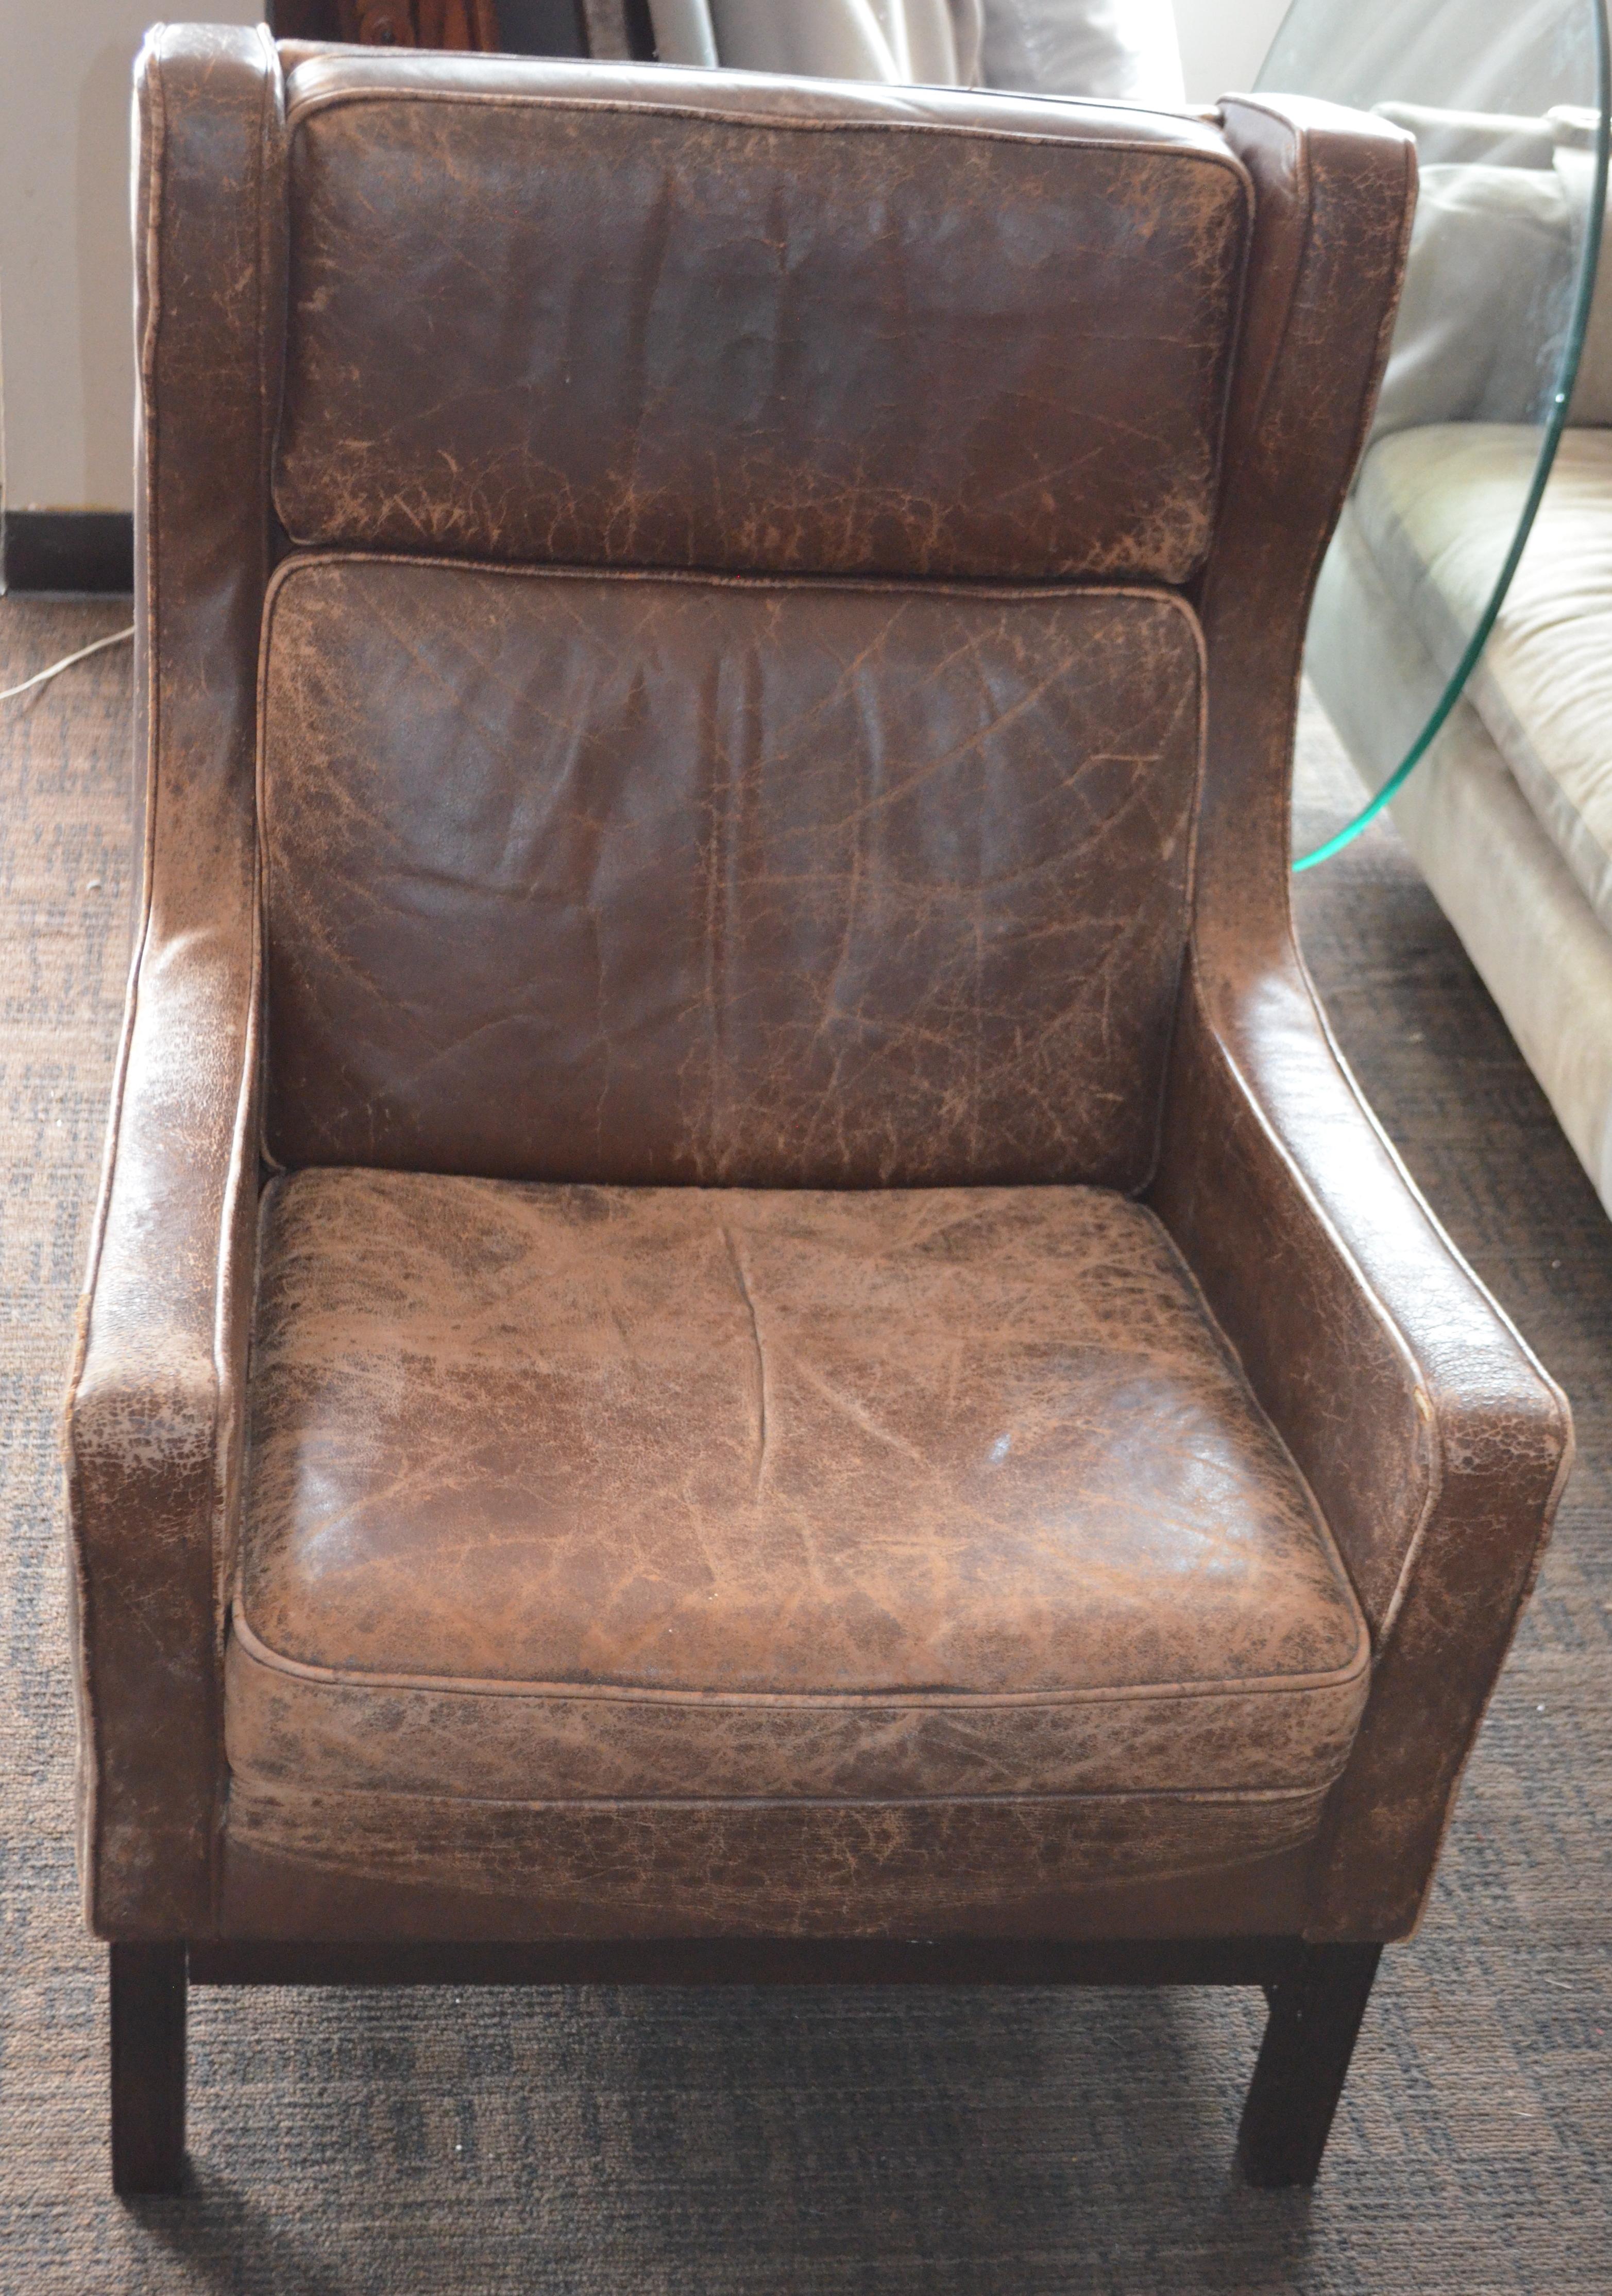 worn chair